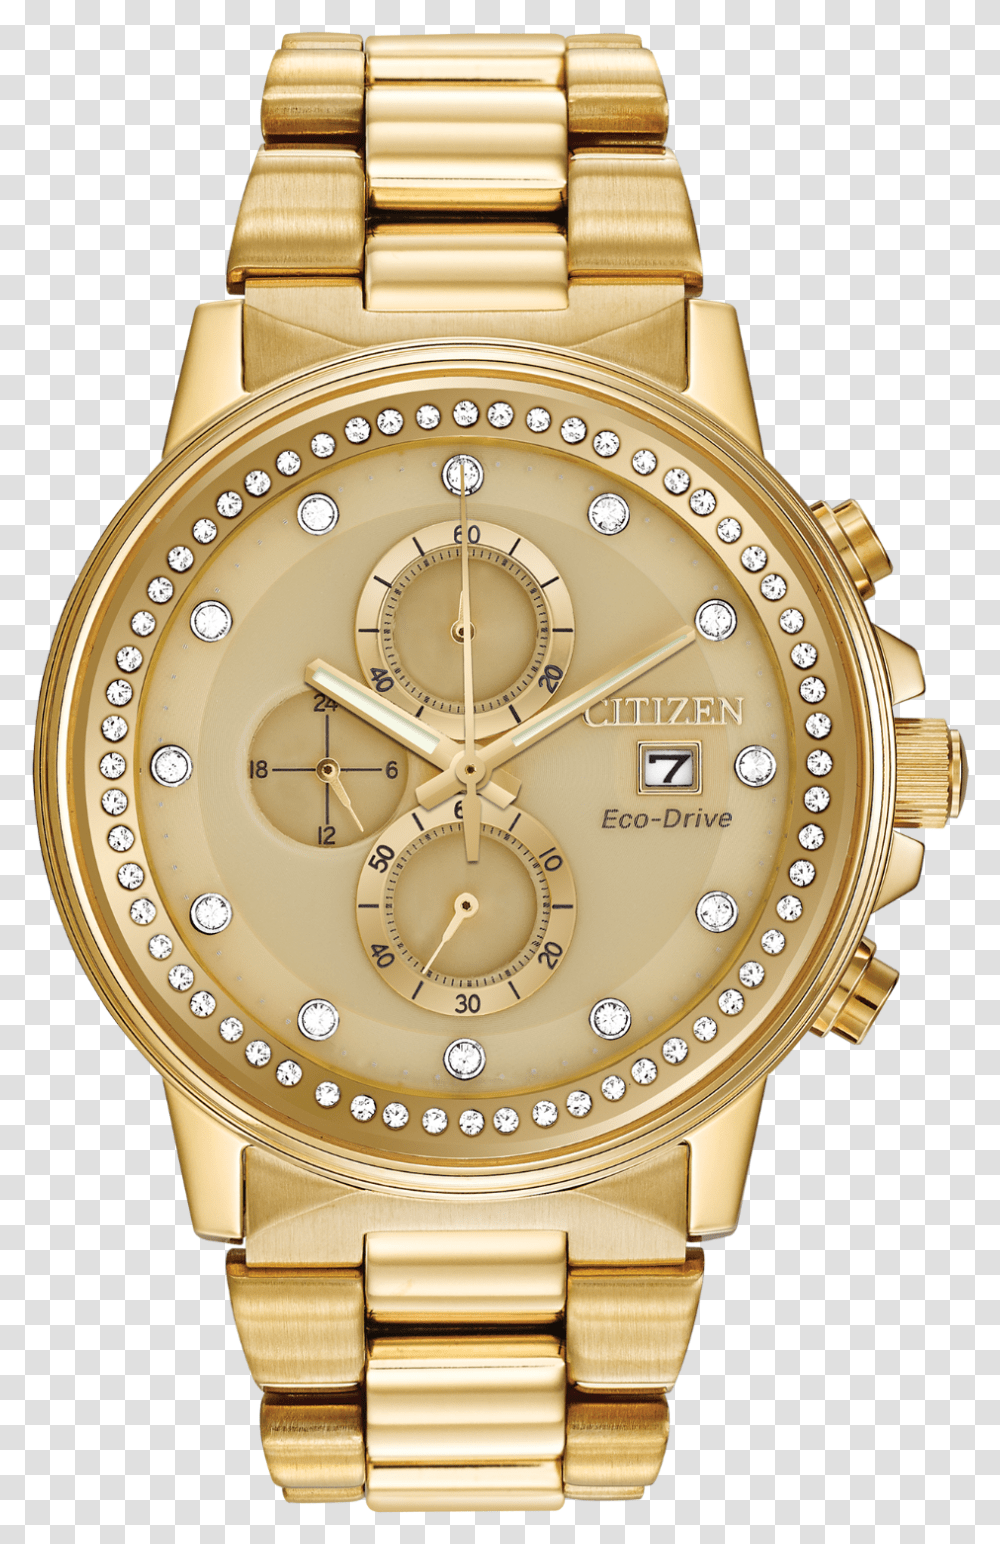 Citizen Gold Watch With Diamonds Citizen Watch With Bracelet, Wristwatch, Clock Tower, Architecture, Building Transparent Png